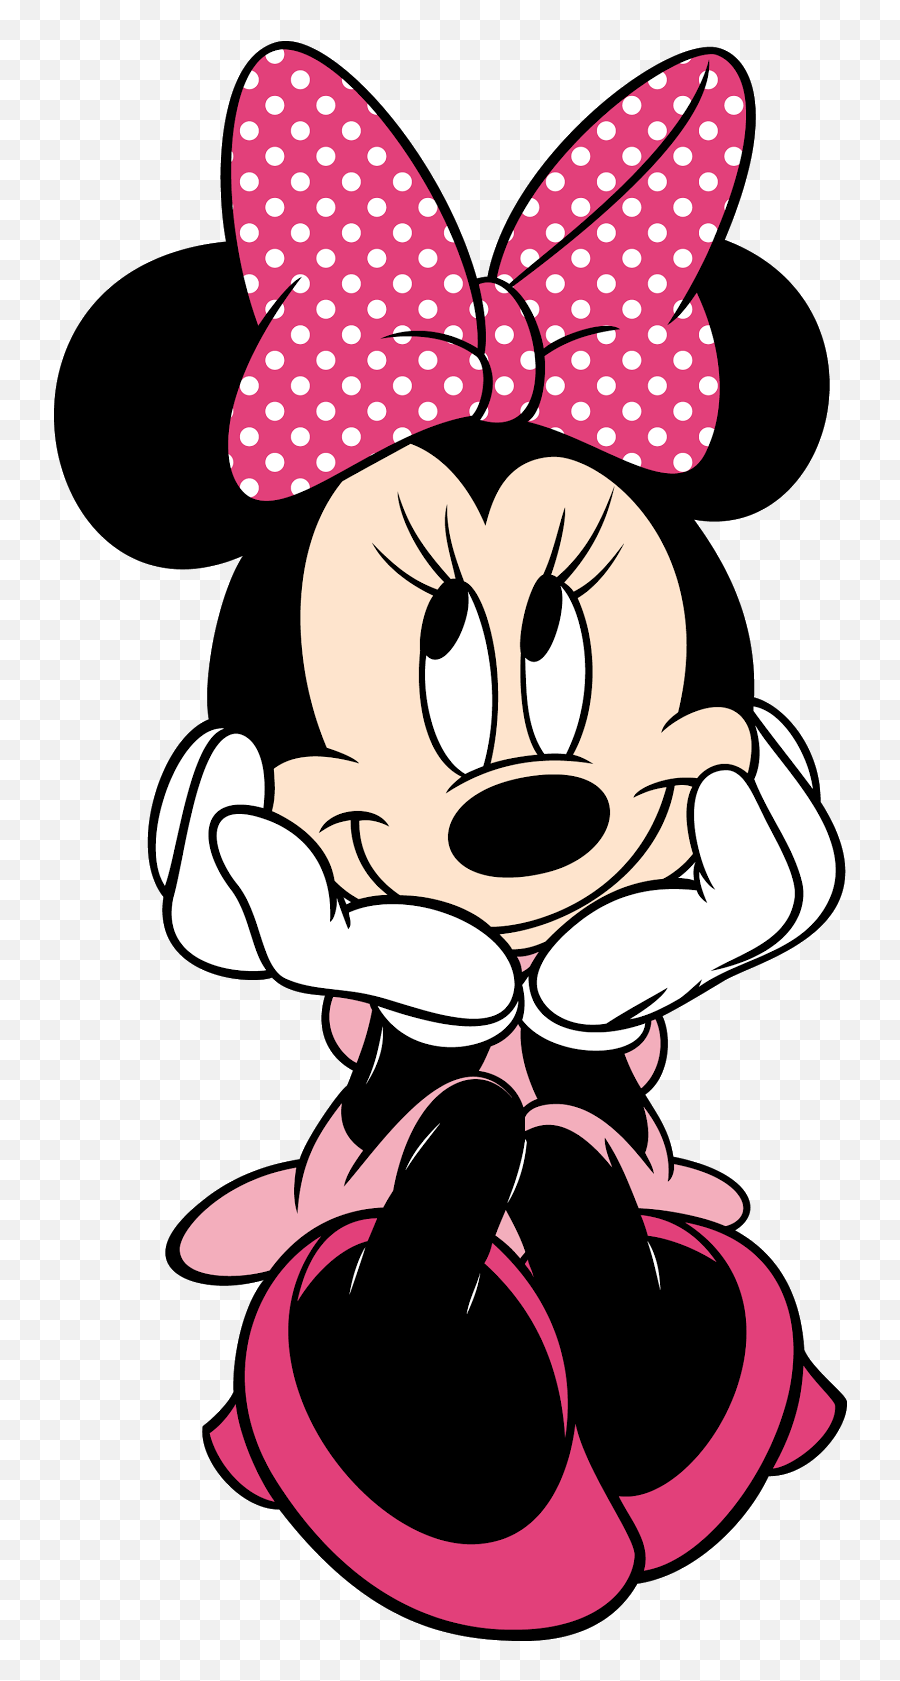 Minnie Mouse Png Transparent Images - Minnie Mouse Mickey Mouse,Minnie Mouse Transparent